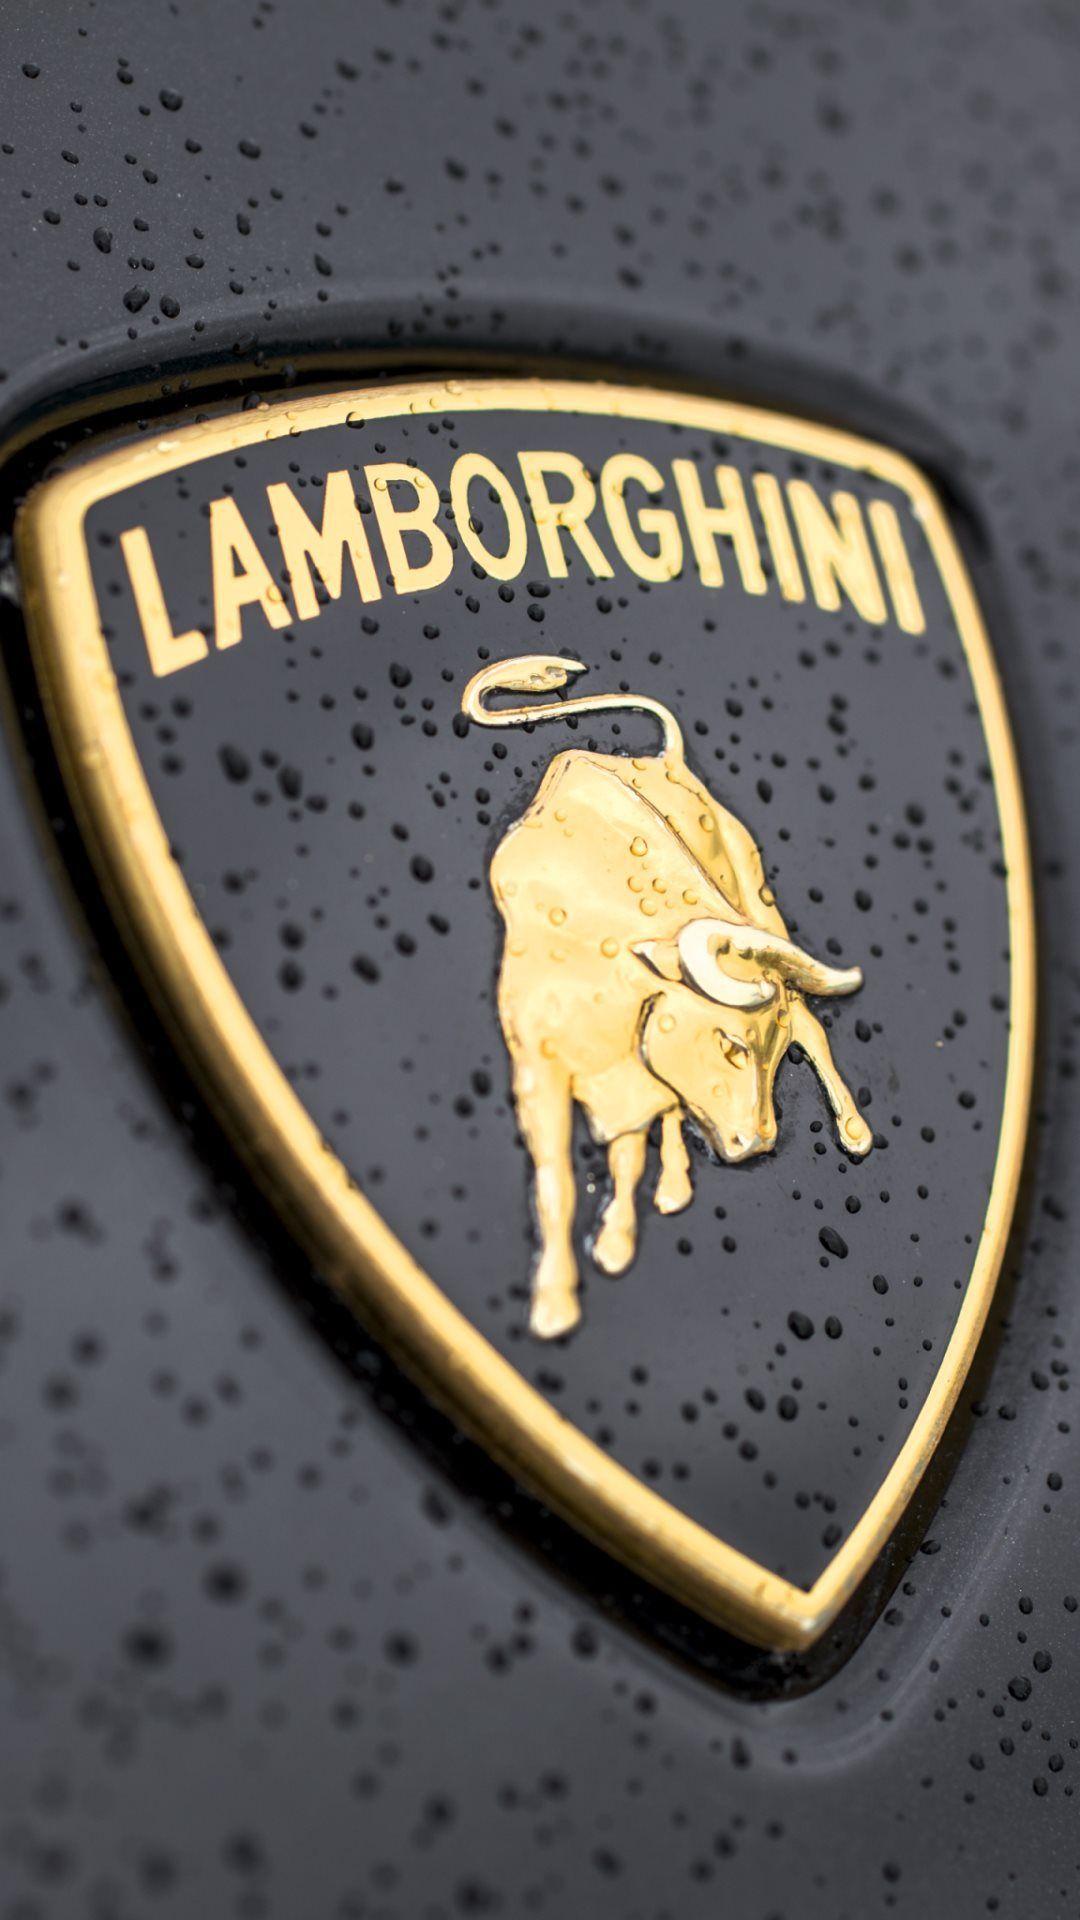 Lamborghini Logo - Lamborghini logo - High quality htc one wallpapers and abstract ...